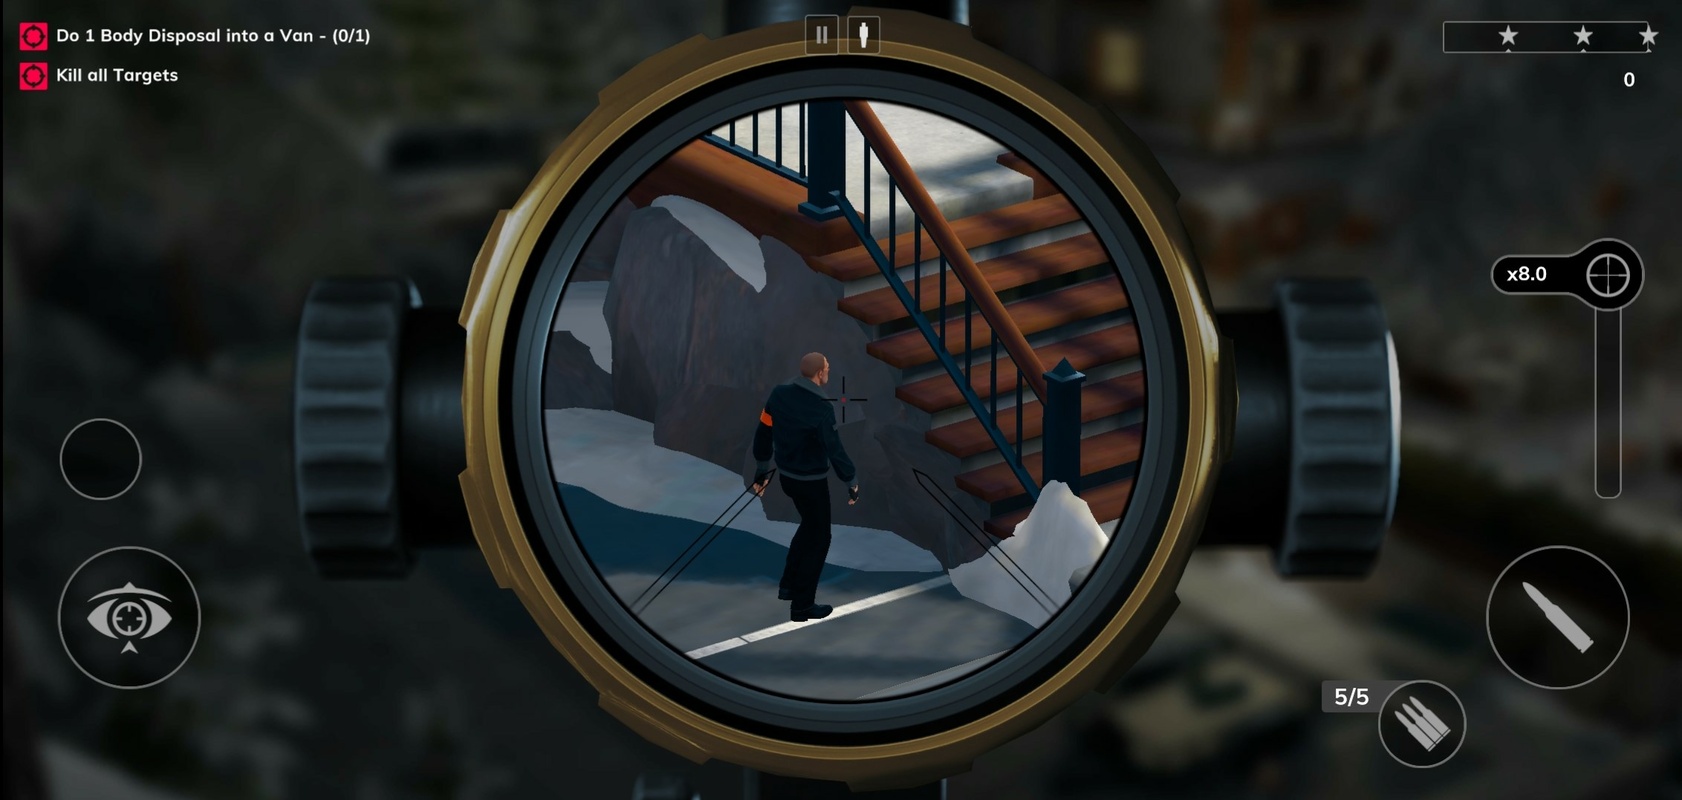 Hitman Sniper: The Shadows 13.3.0 APK feature